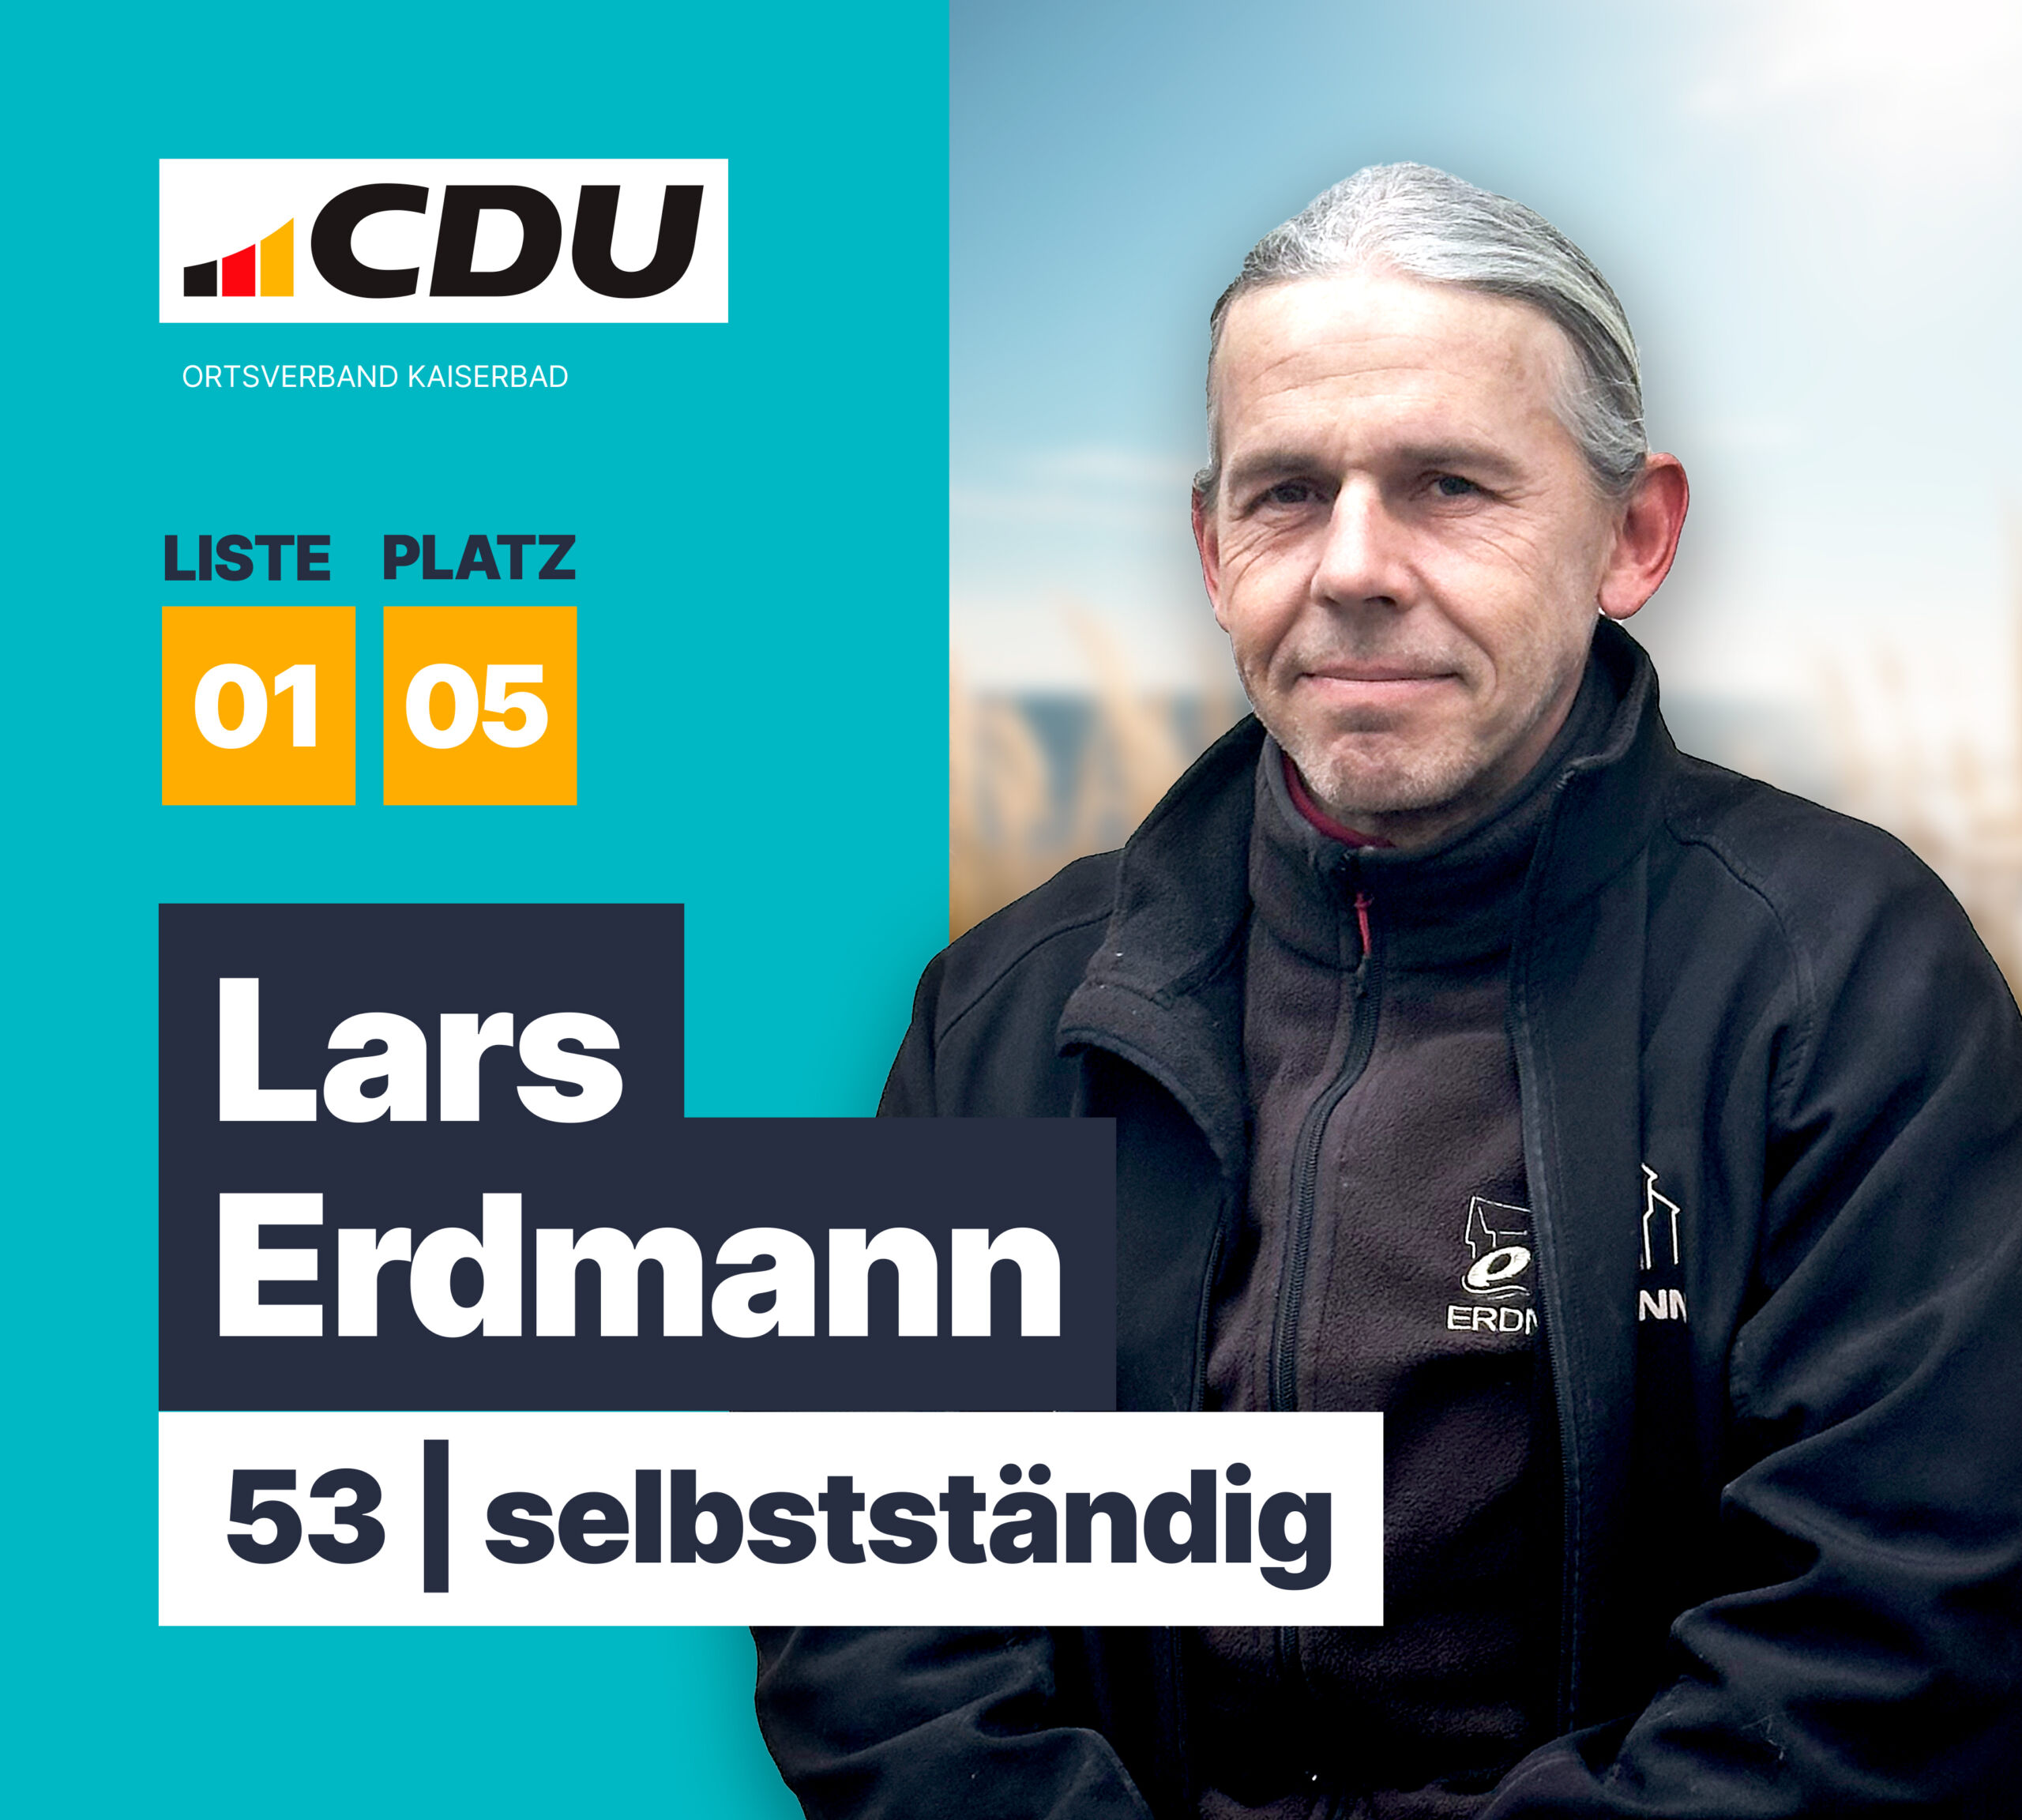 Lars Erdmann